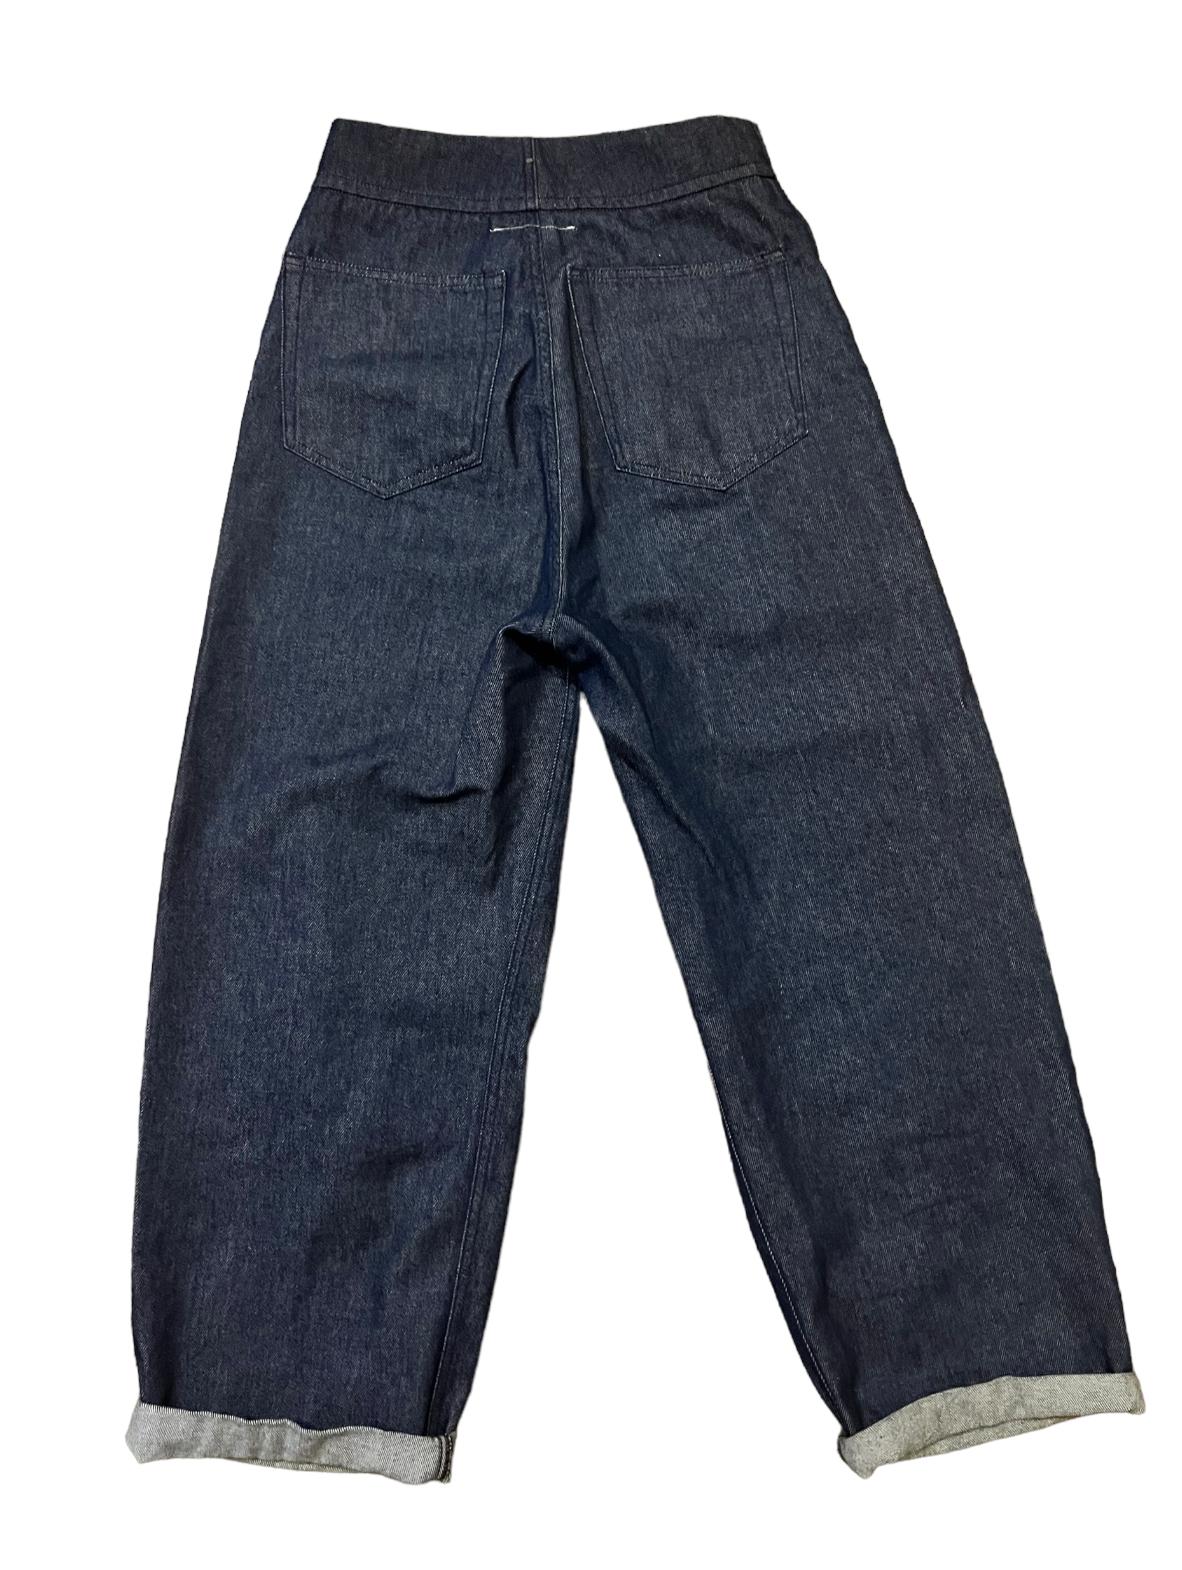 Women's MM6 Maison Margiela Dark Blue Denim Jeans Pants, Size 40